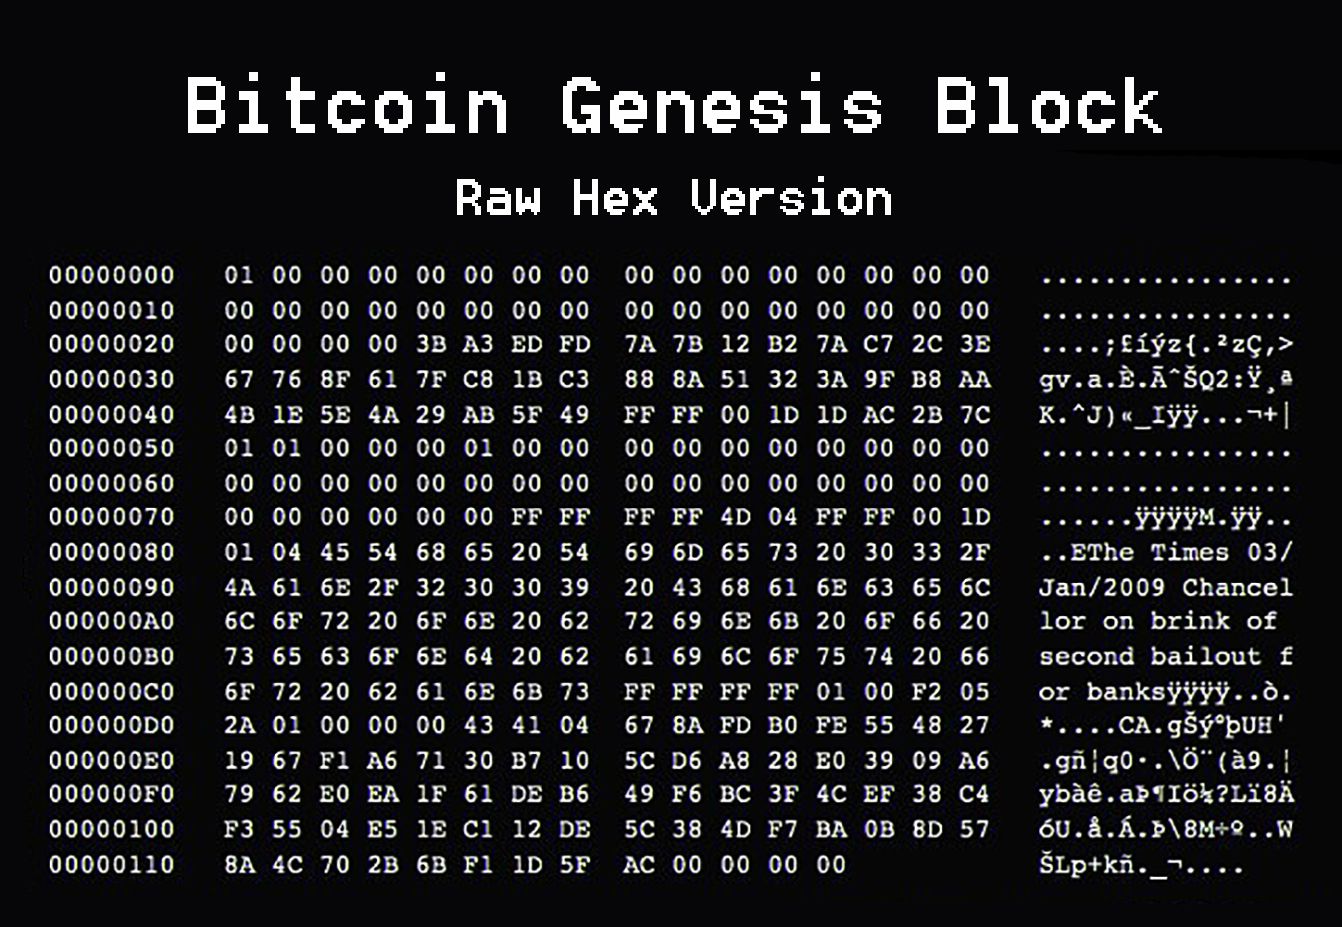 The Bitcoin Genesis Block